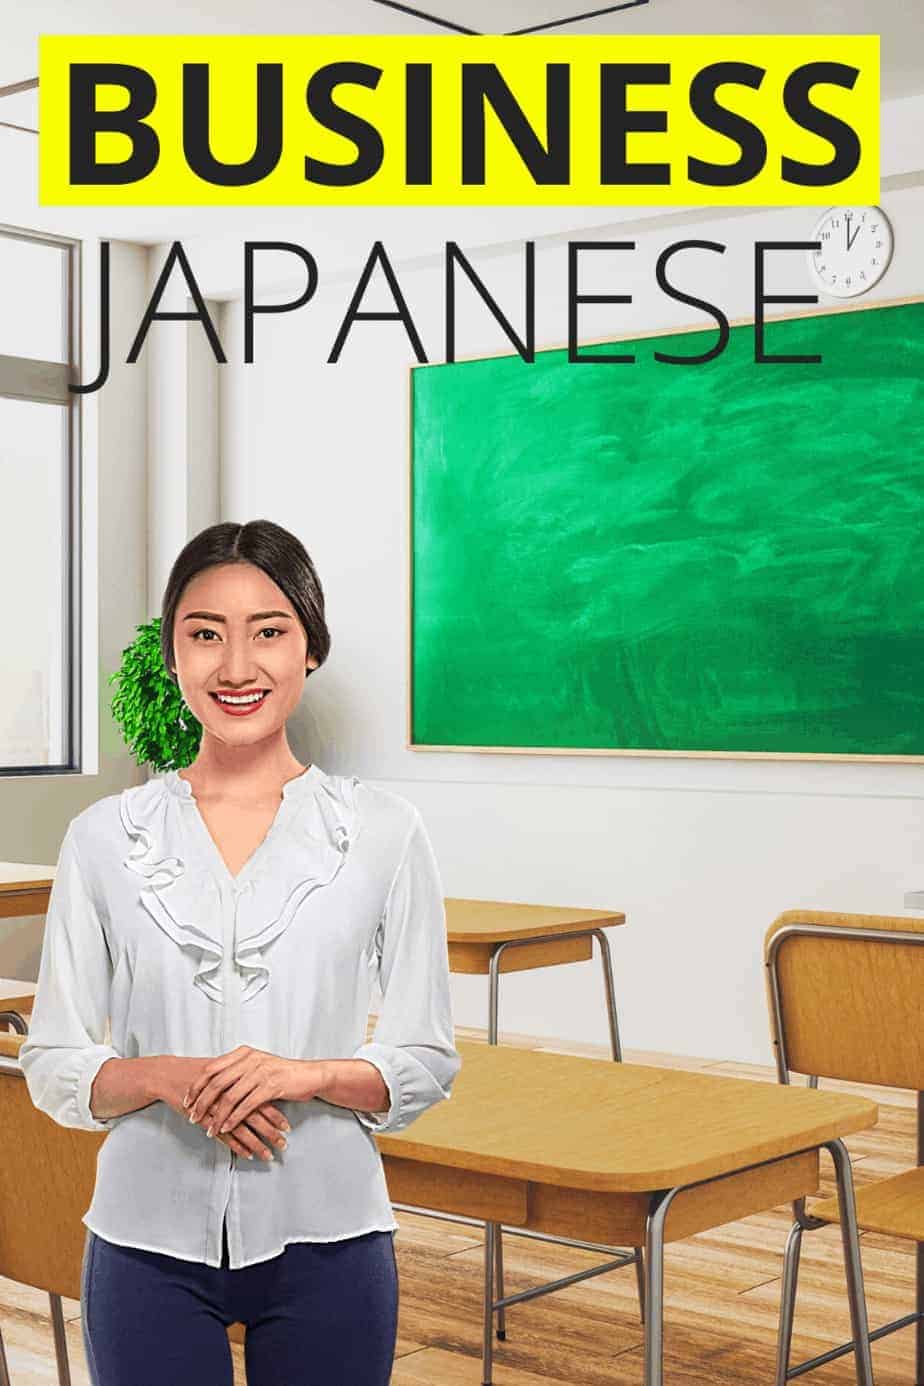 Business Japanese Vocabulary Pinterest Updated